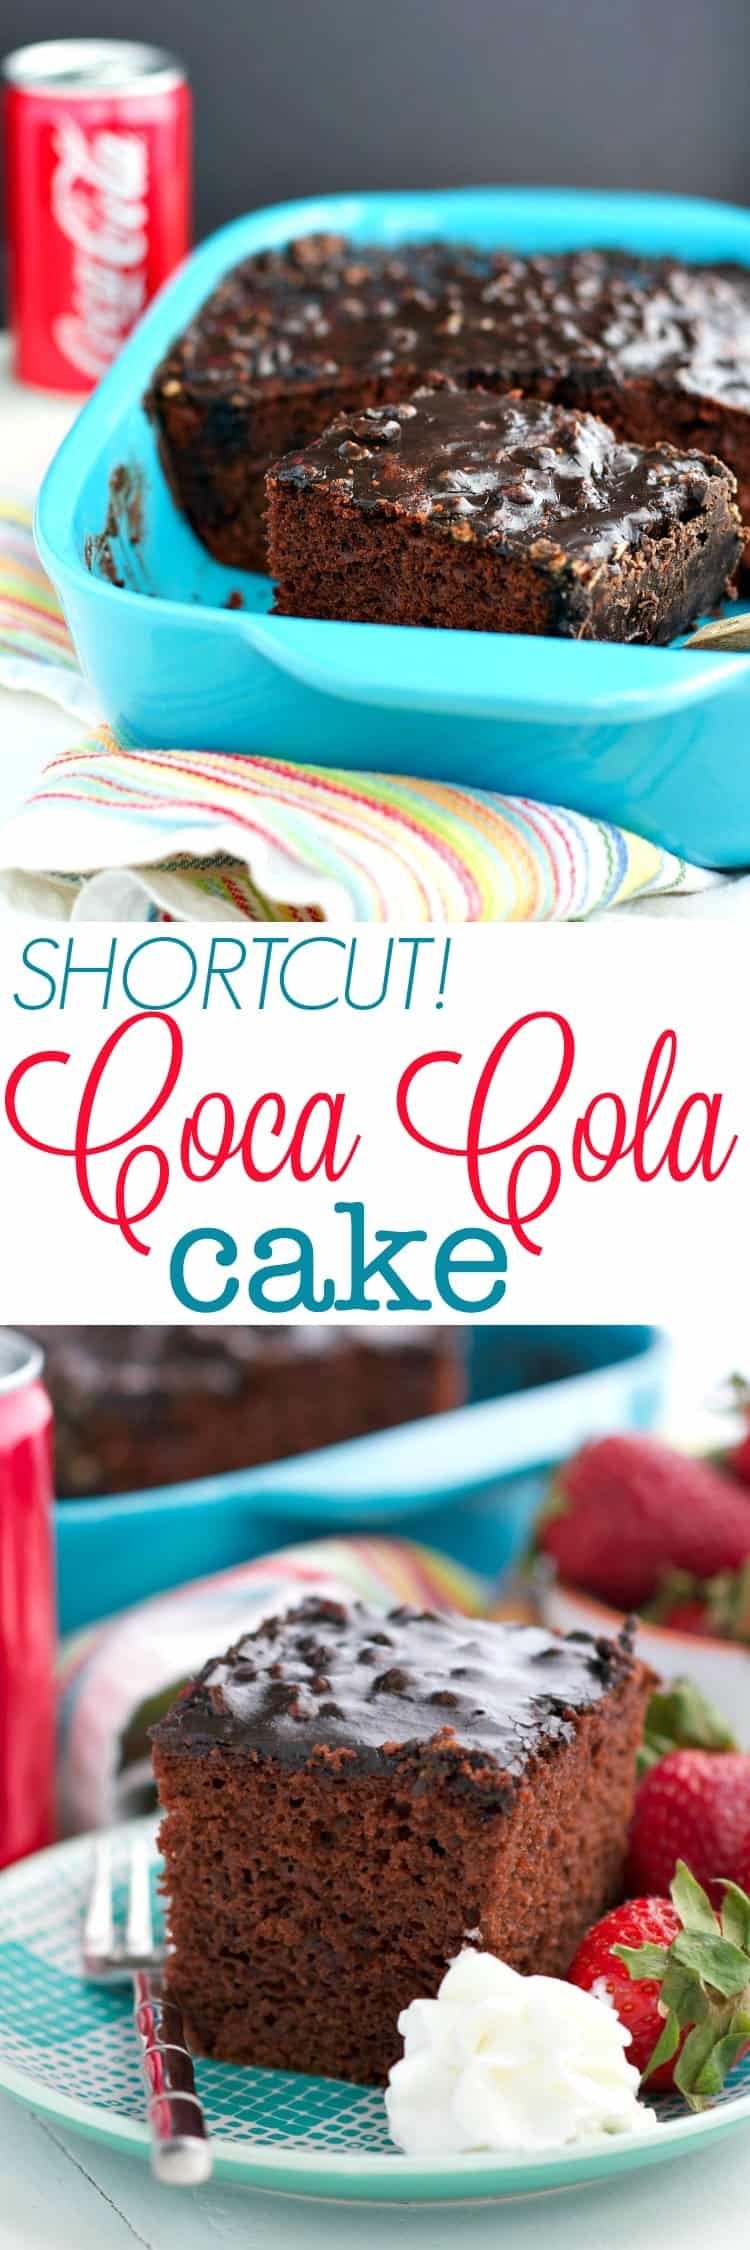 Shortcut Coca Cola Cake - The Seasoned Mom